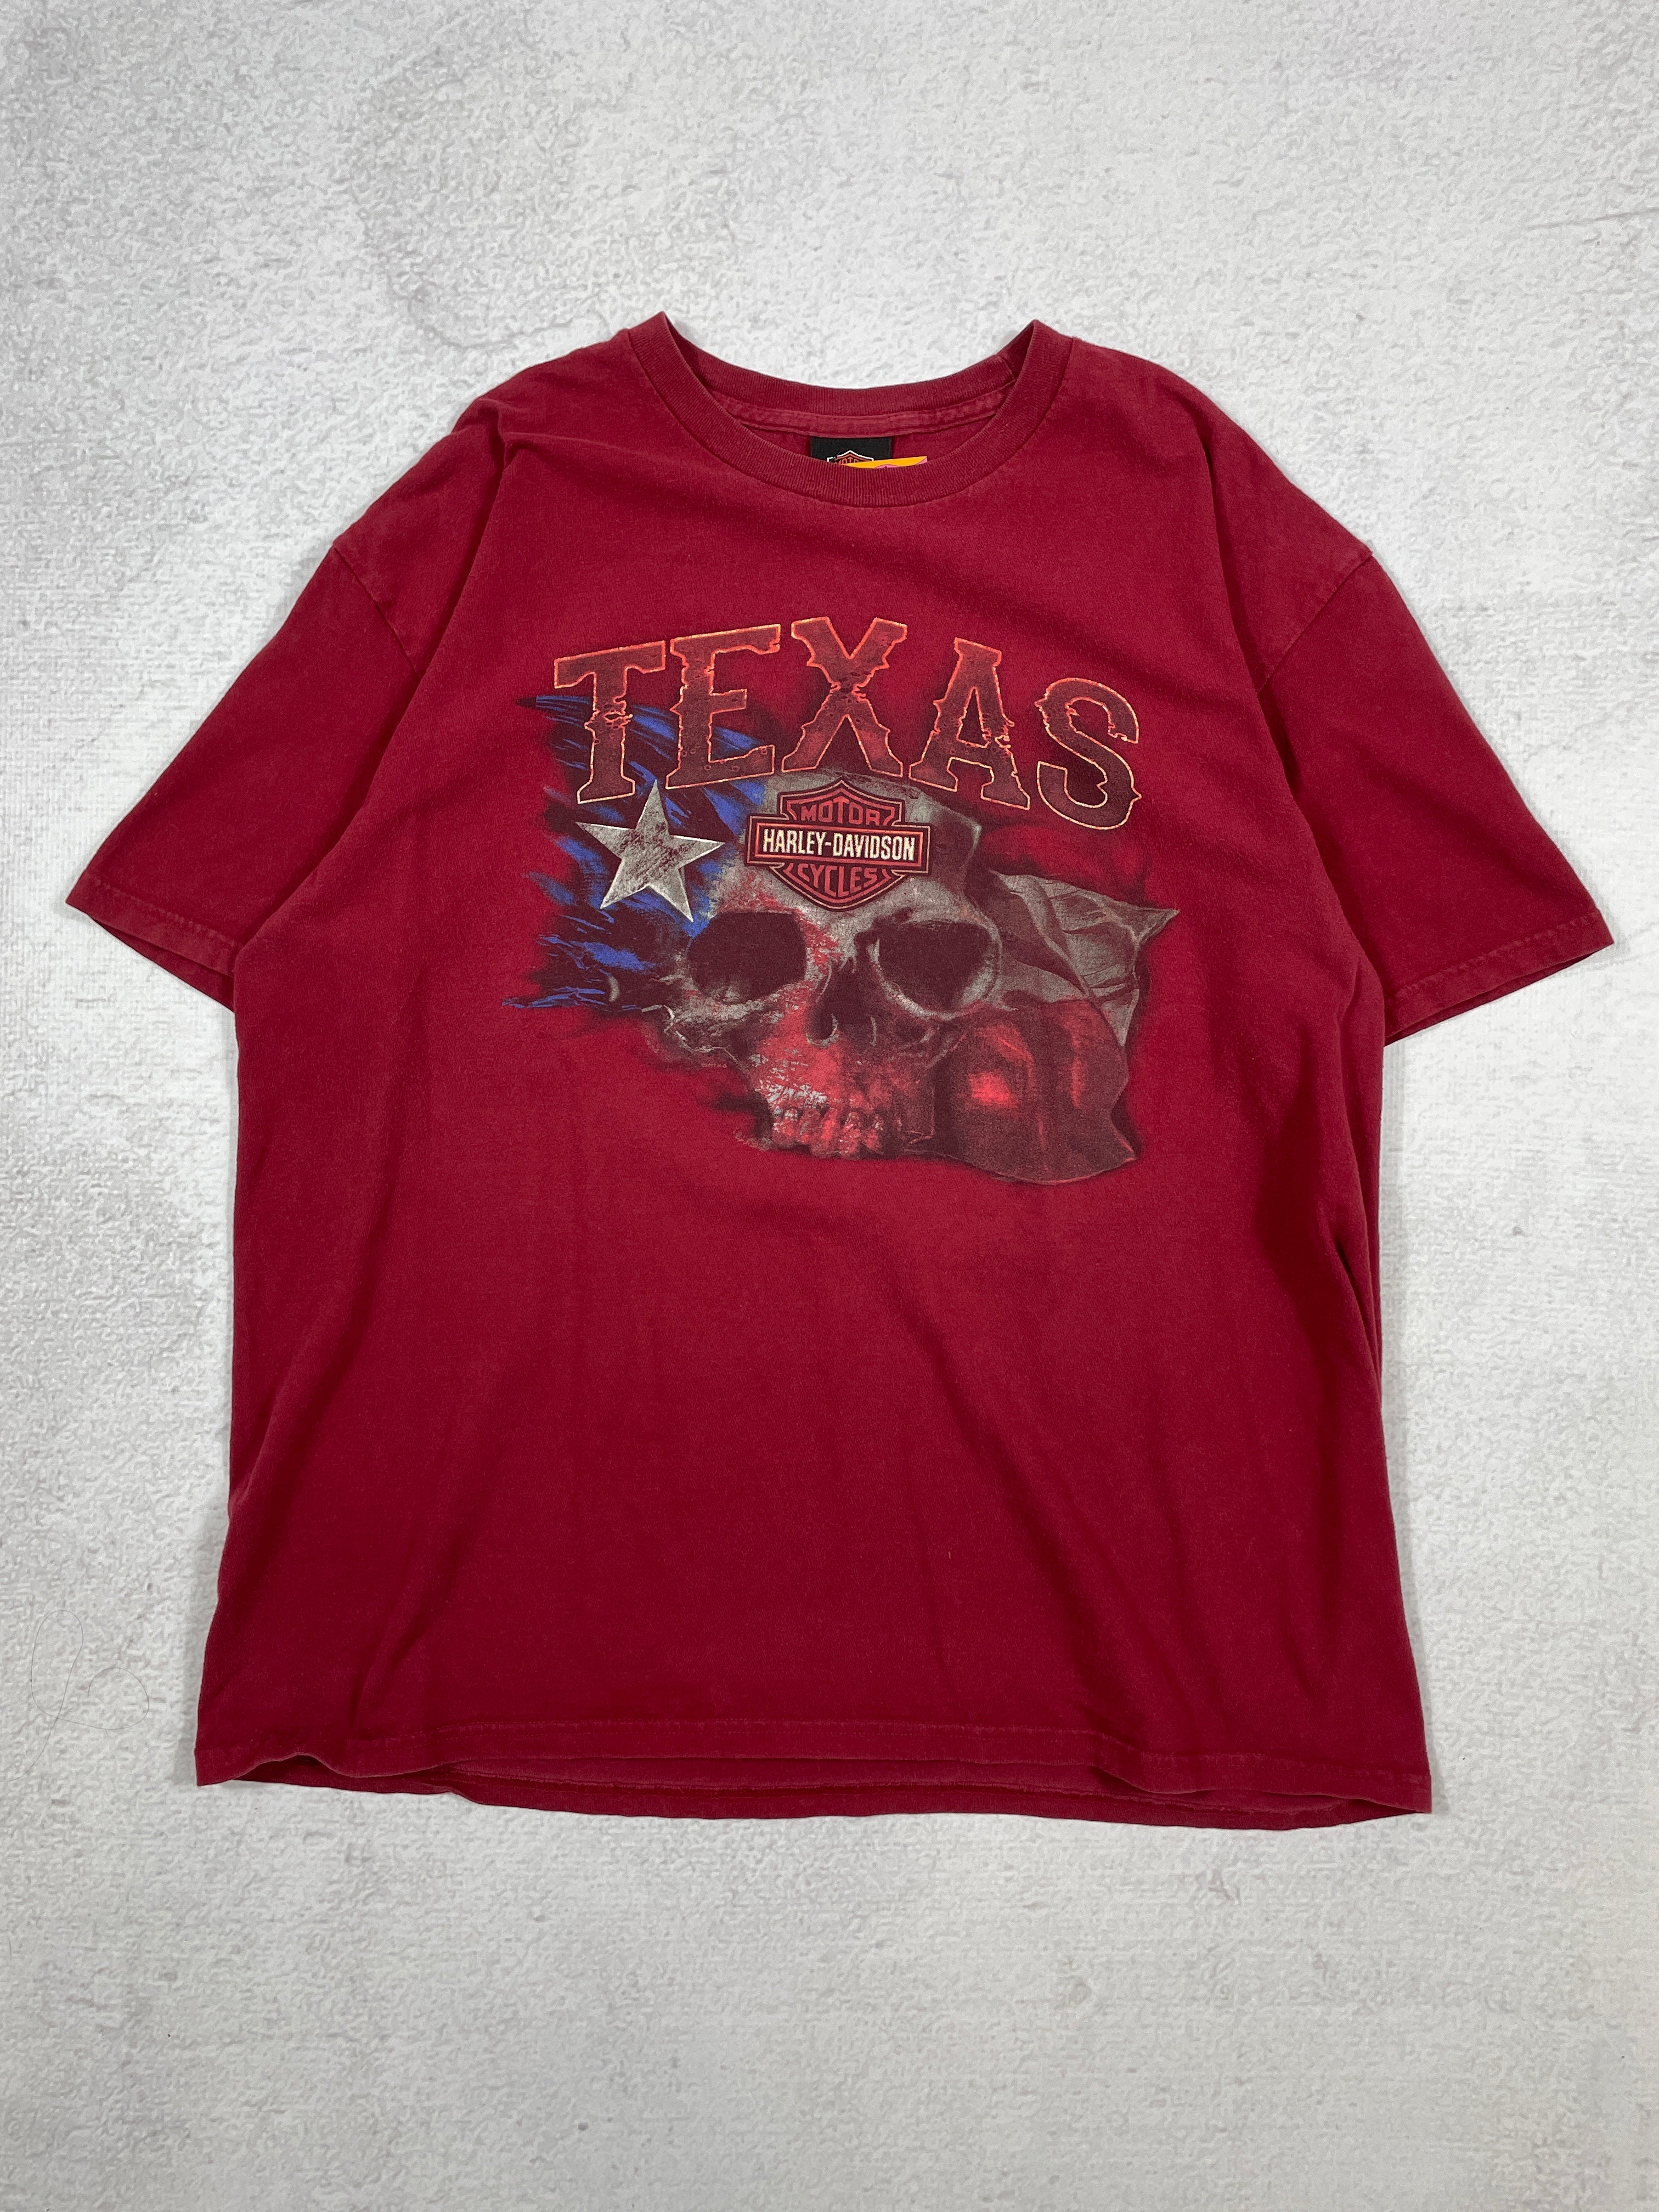 Vintage Harley Davidson Bedford Texas T-Shirt - Men's XL